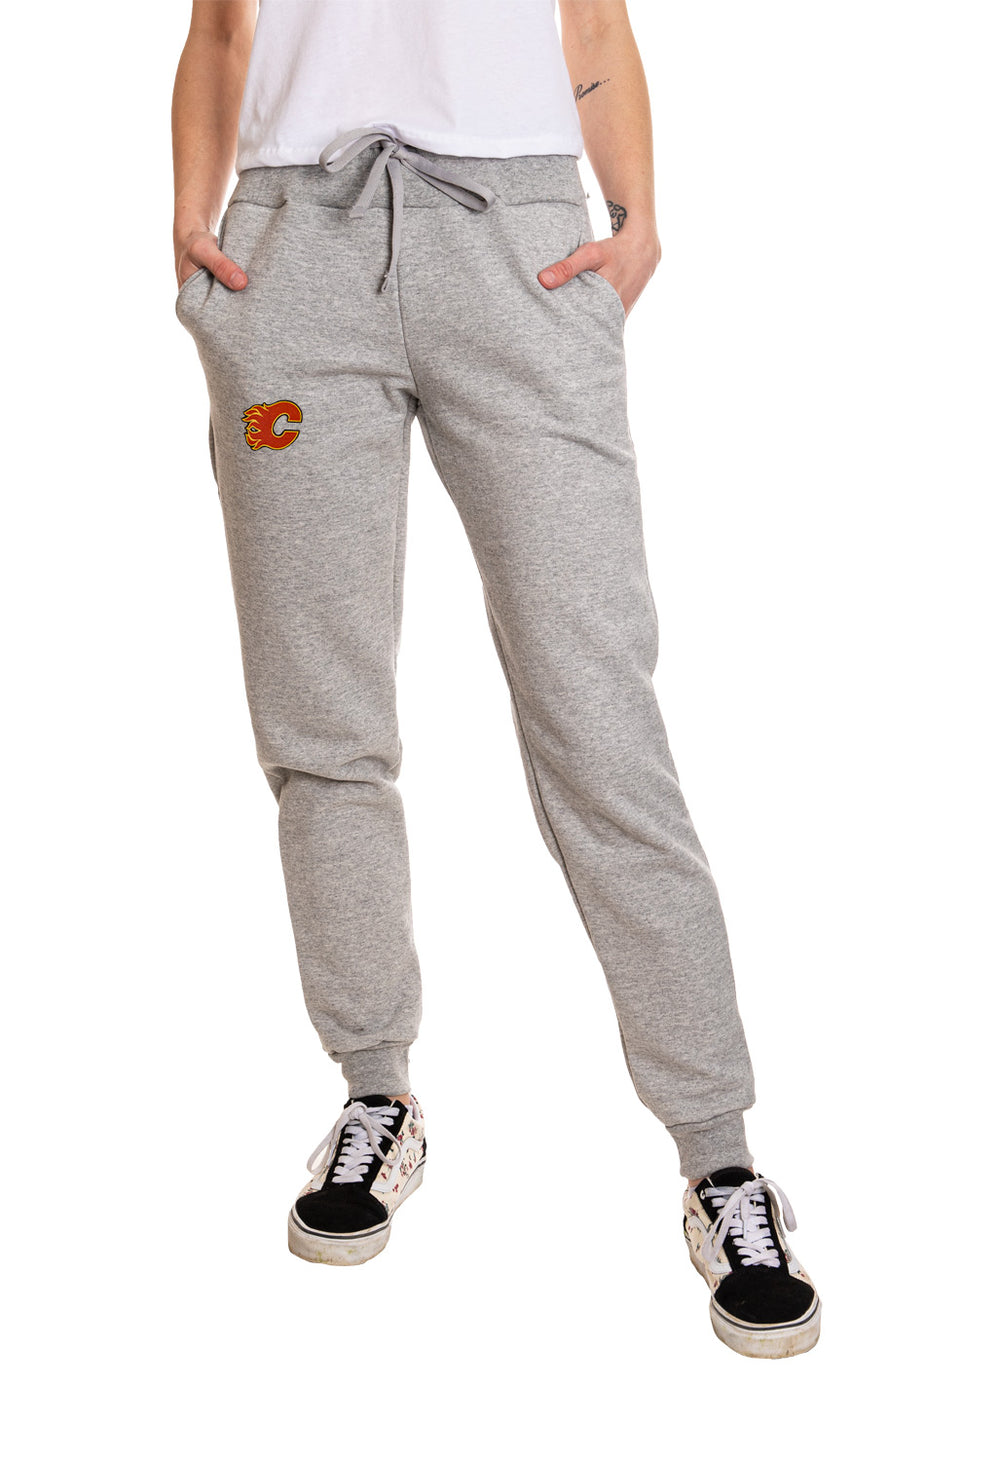 Calgary Flames Premium Fleece Sweatpants for Men 